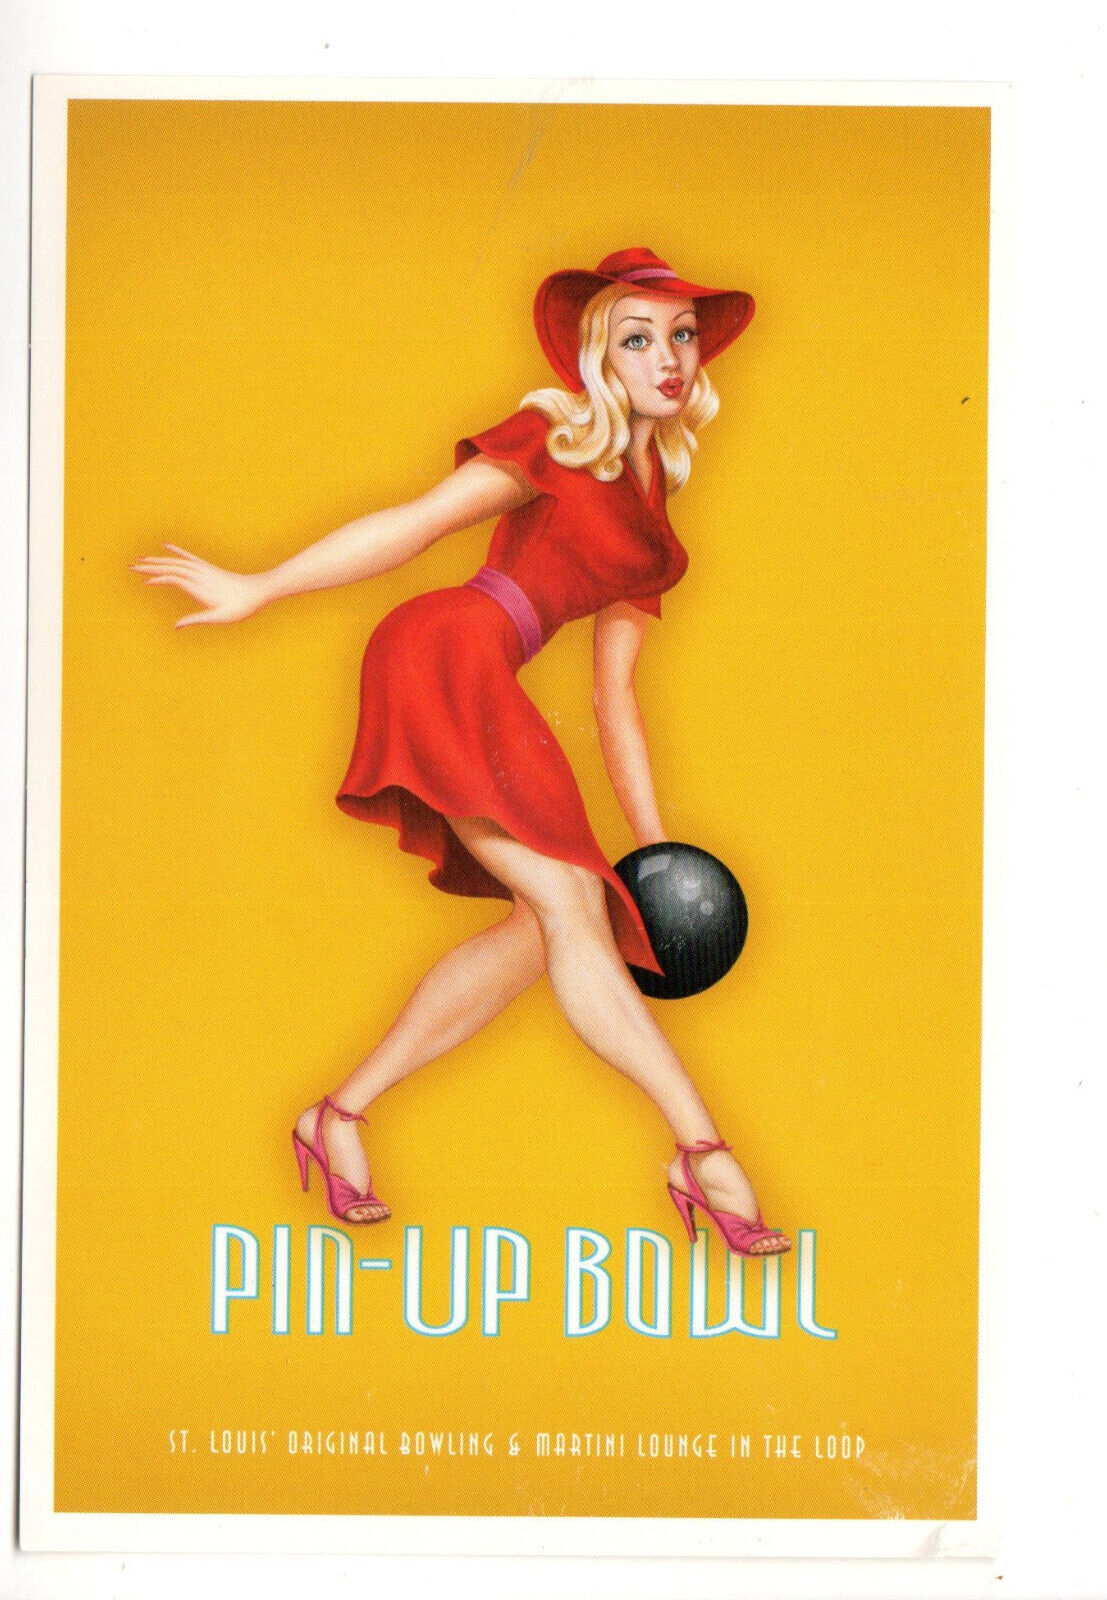 Adv Postcard: Pin-Up Bowl, St. Louis MO (Missouri) - Camille ; bowling alley